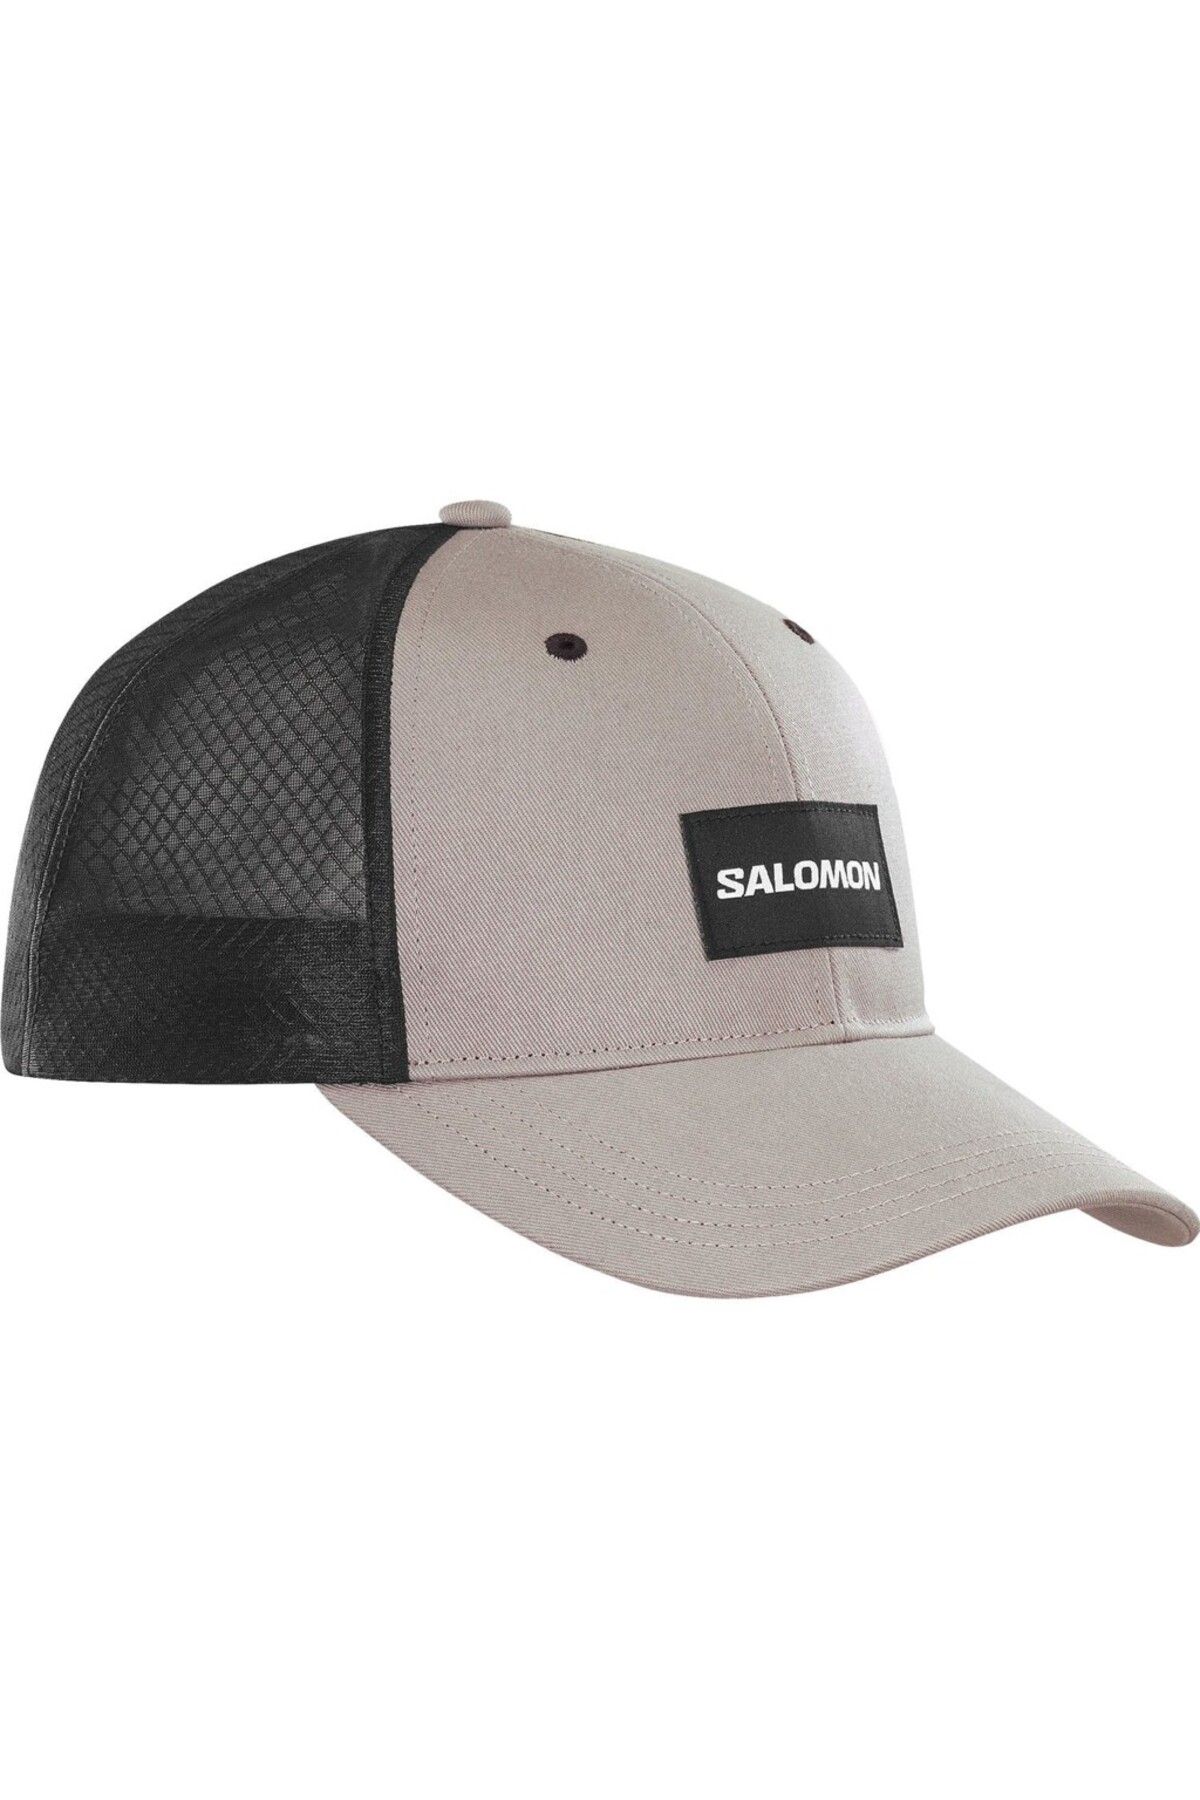 Salomon Trucker Curved Unisex Şapka